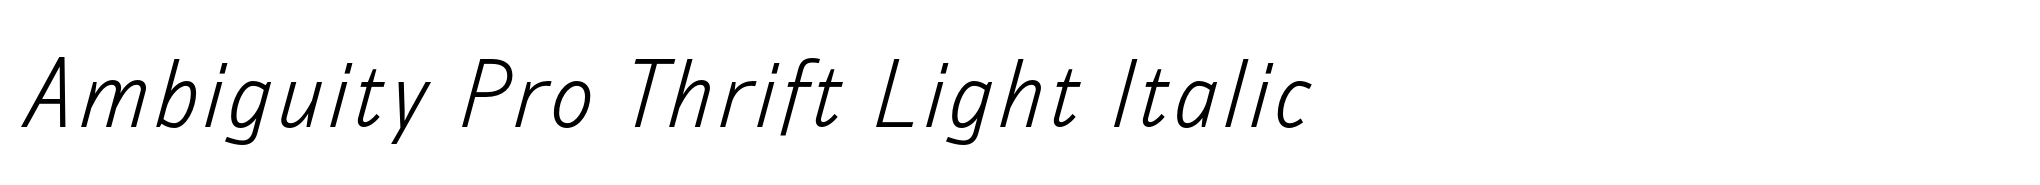 Ambiguity Pro Thrift Light Italic image